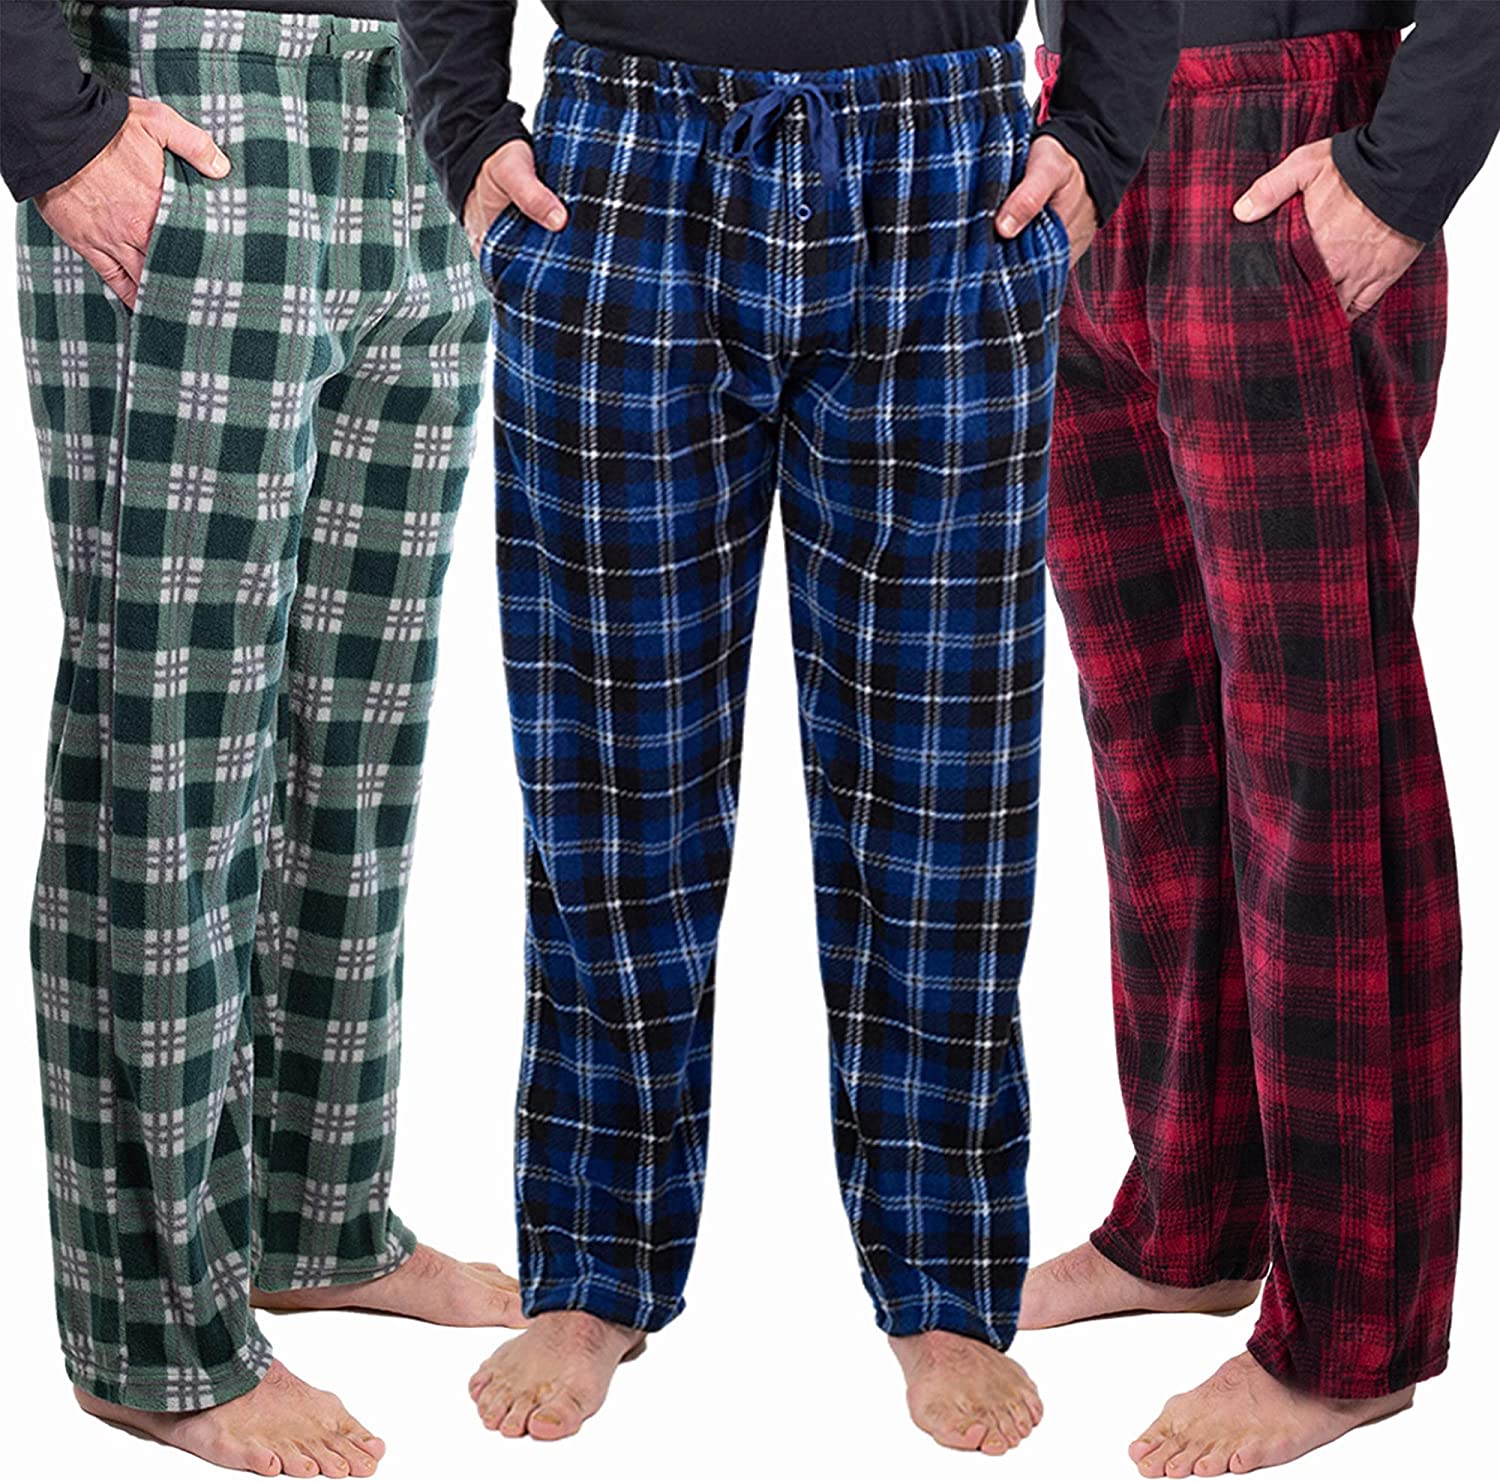 3 Pack: Mens Cotton Lounge Jogger Winter Christmas Pajama Pants